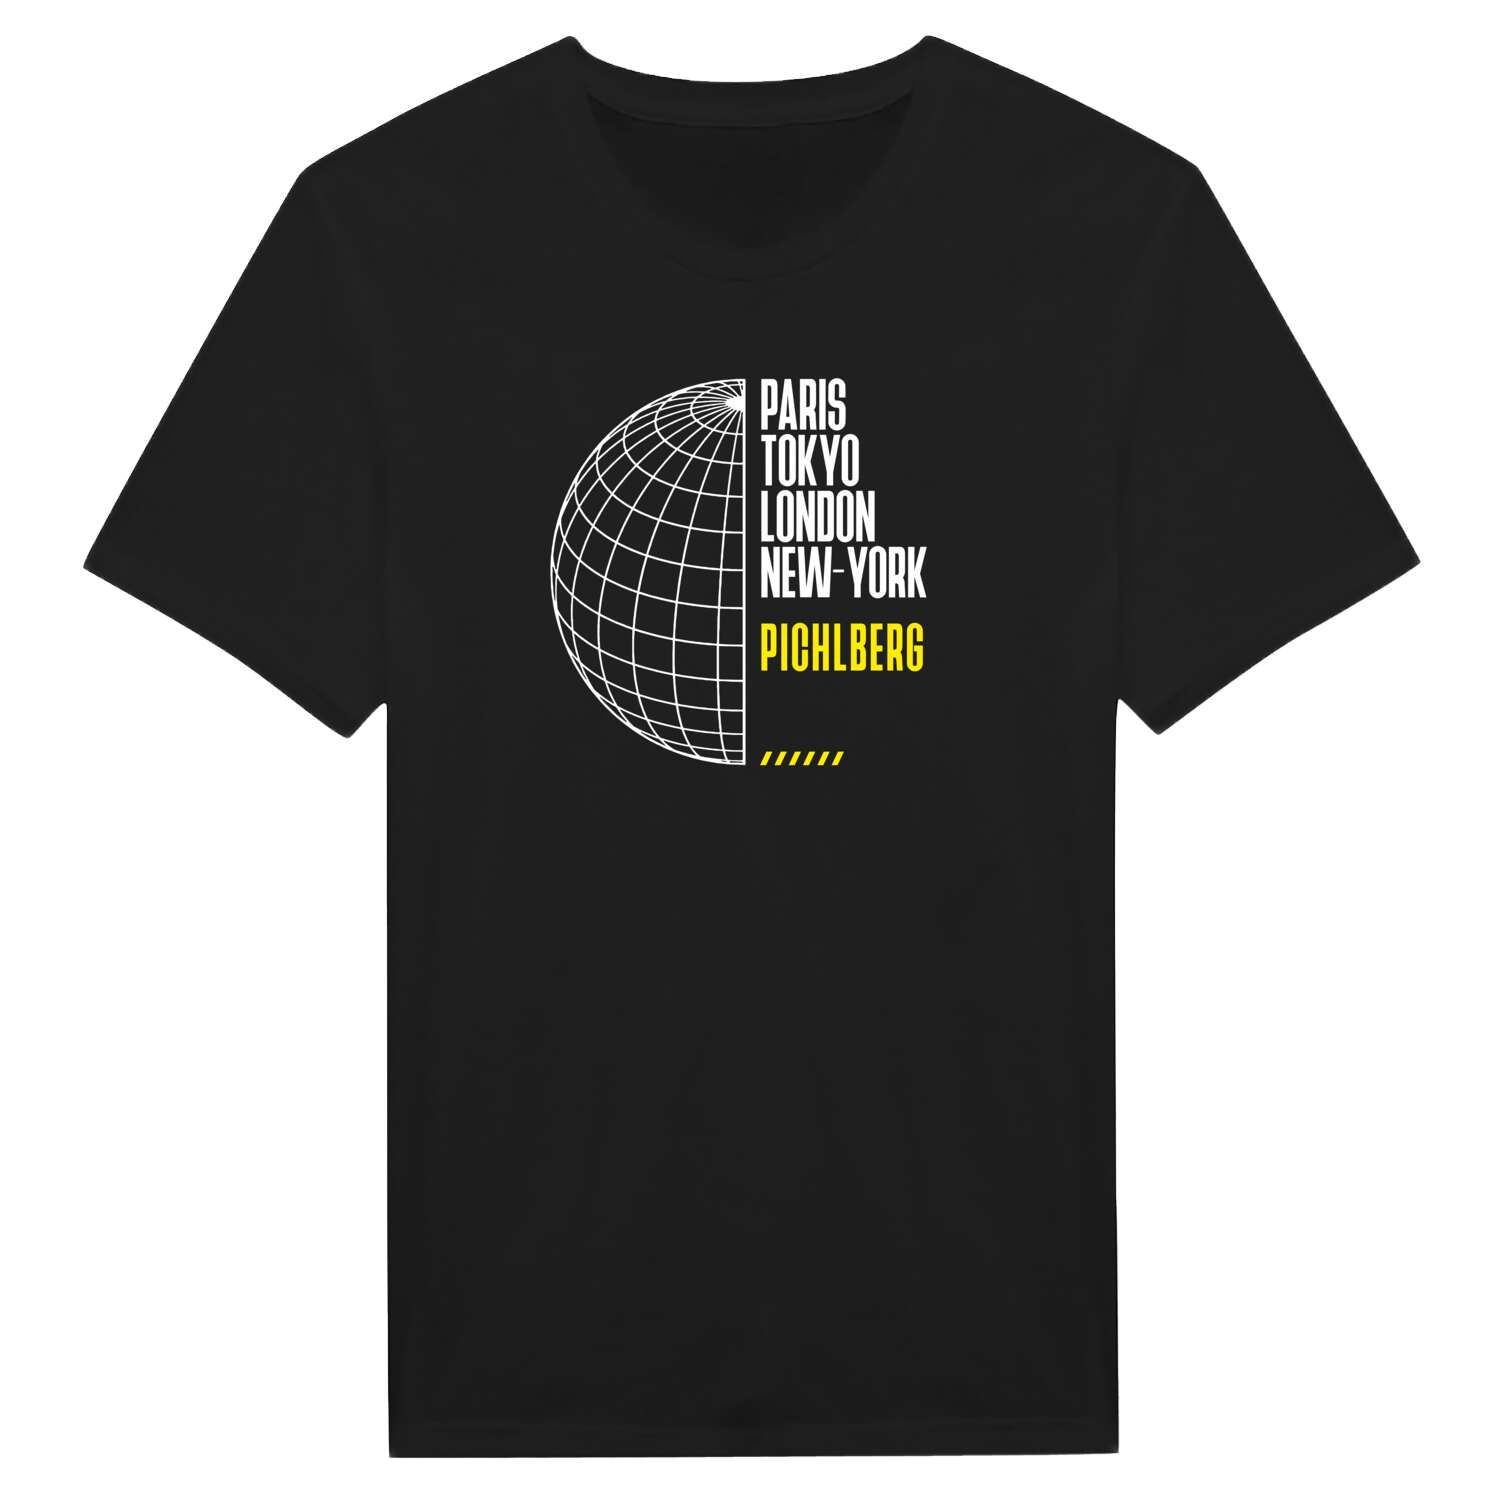 Pichlberg T-Shirt »Paris Tokyo London«